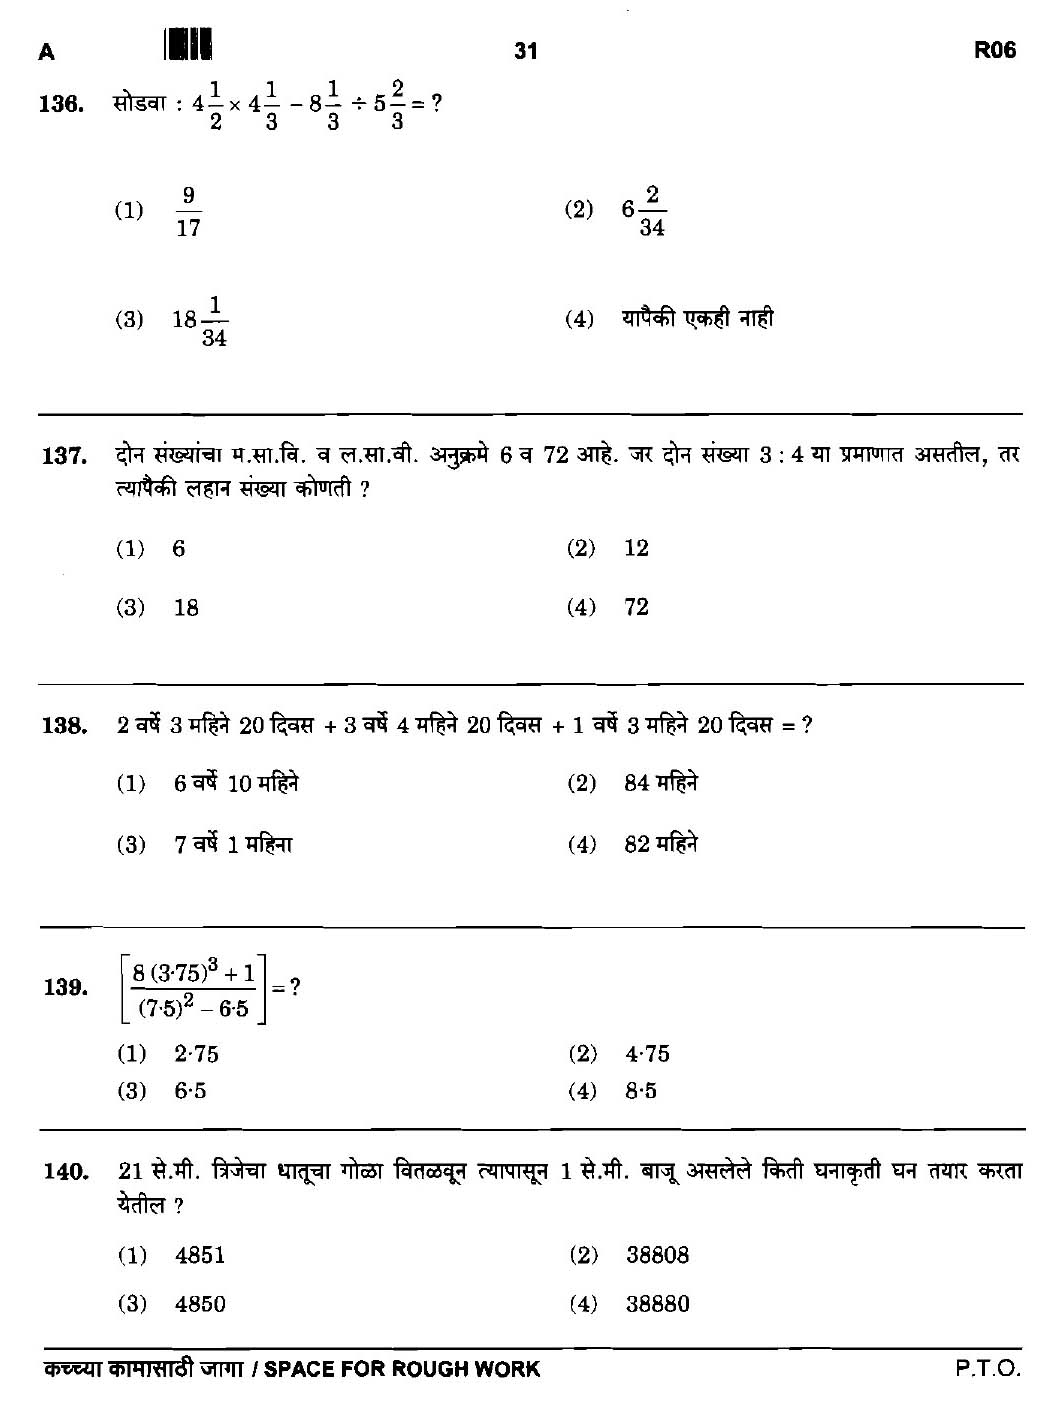 Maharashtra PSC Clerk Typist Exam Question Paper 2015 30